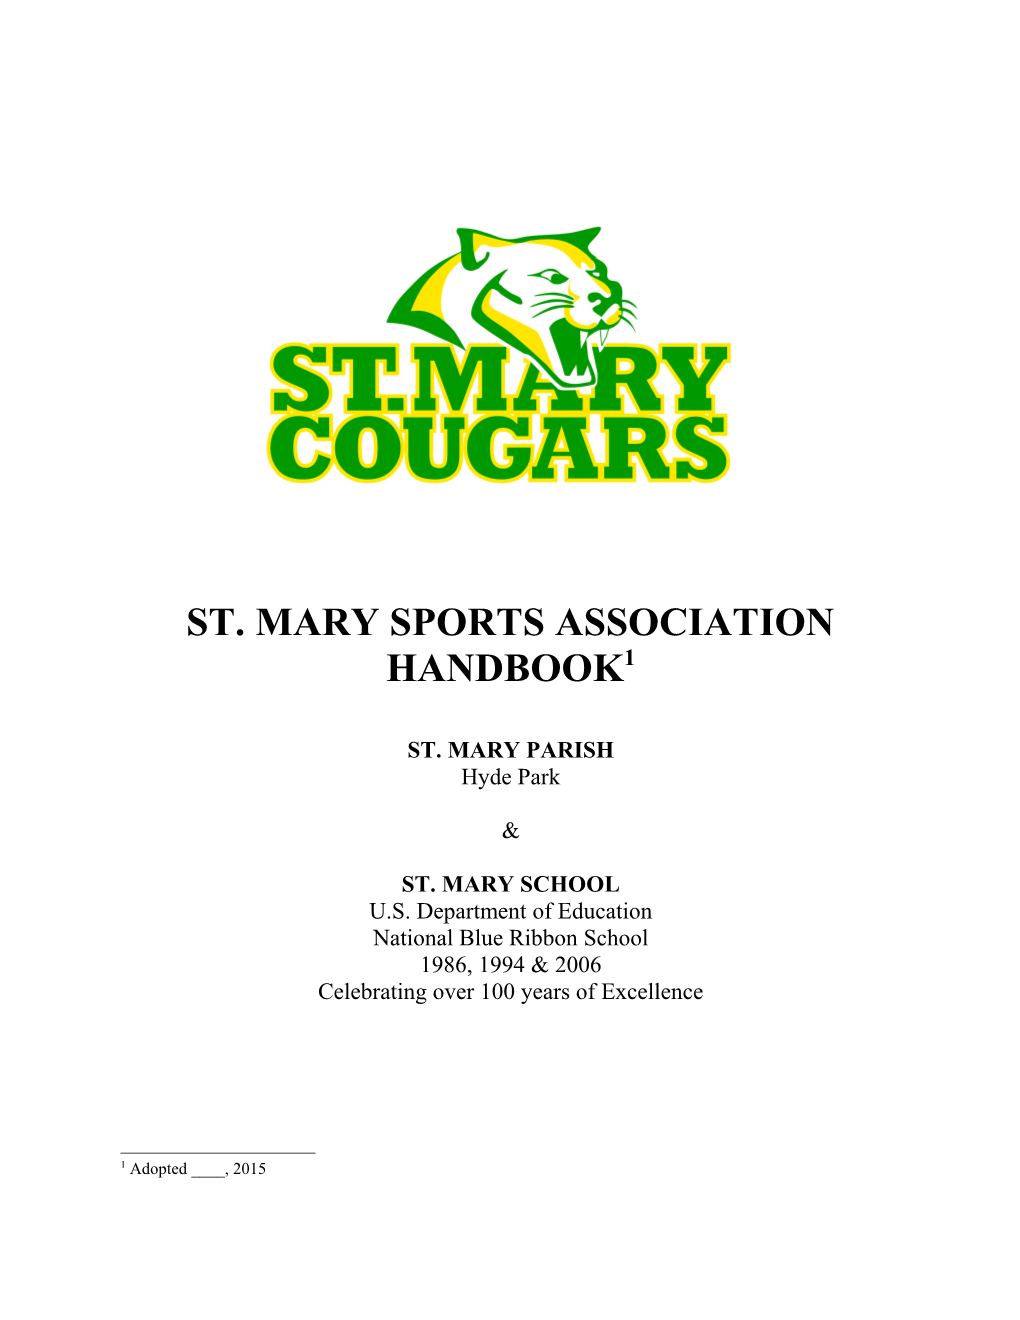 St. Mary Sports Association